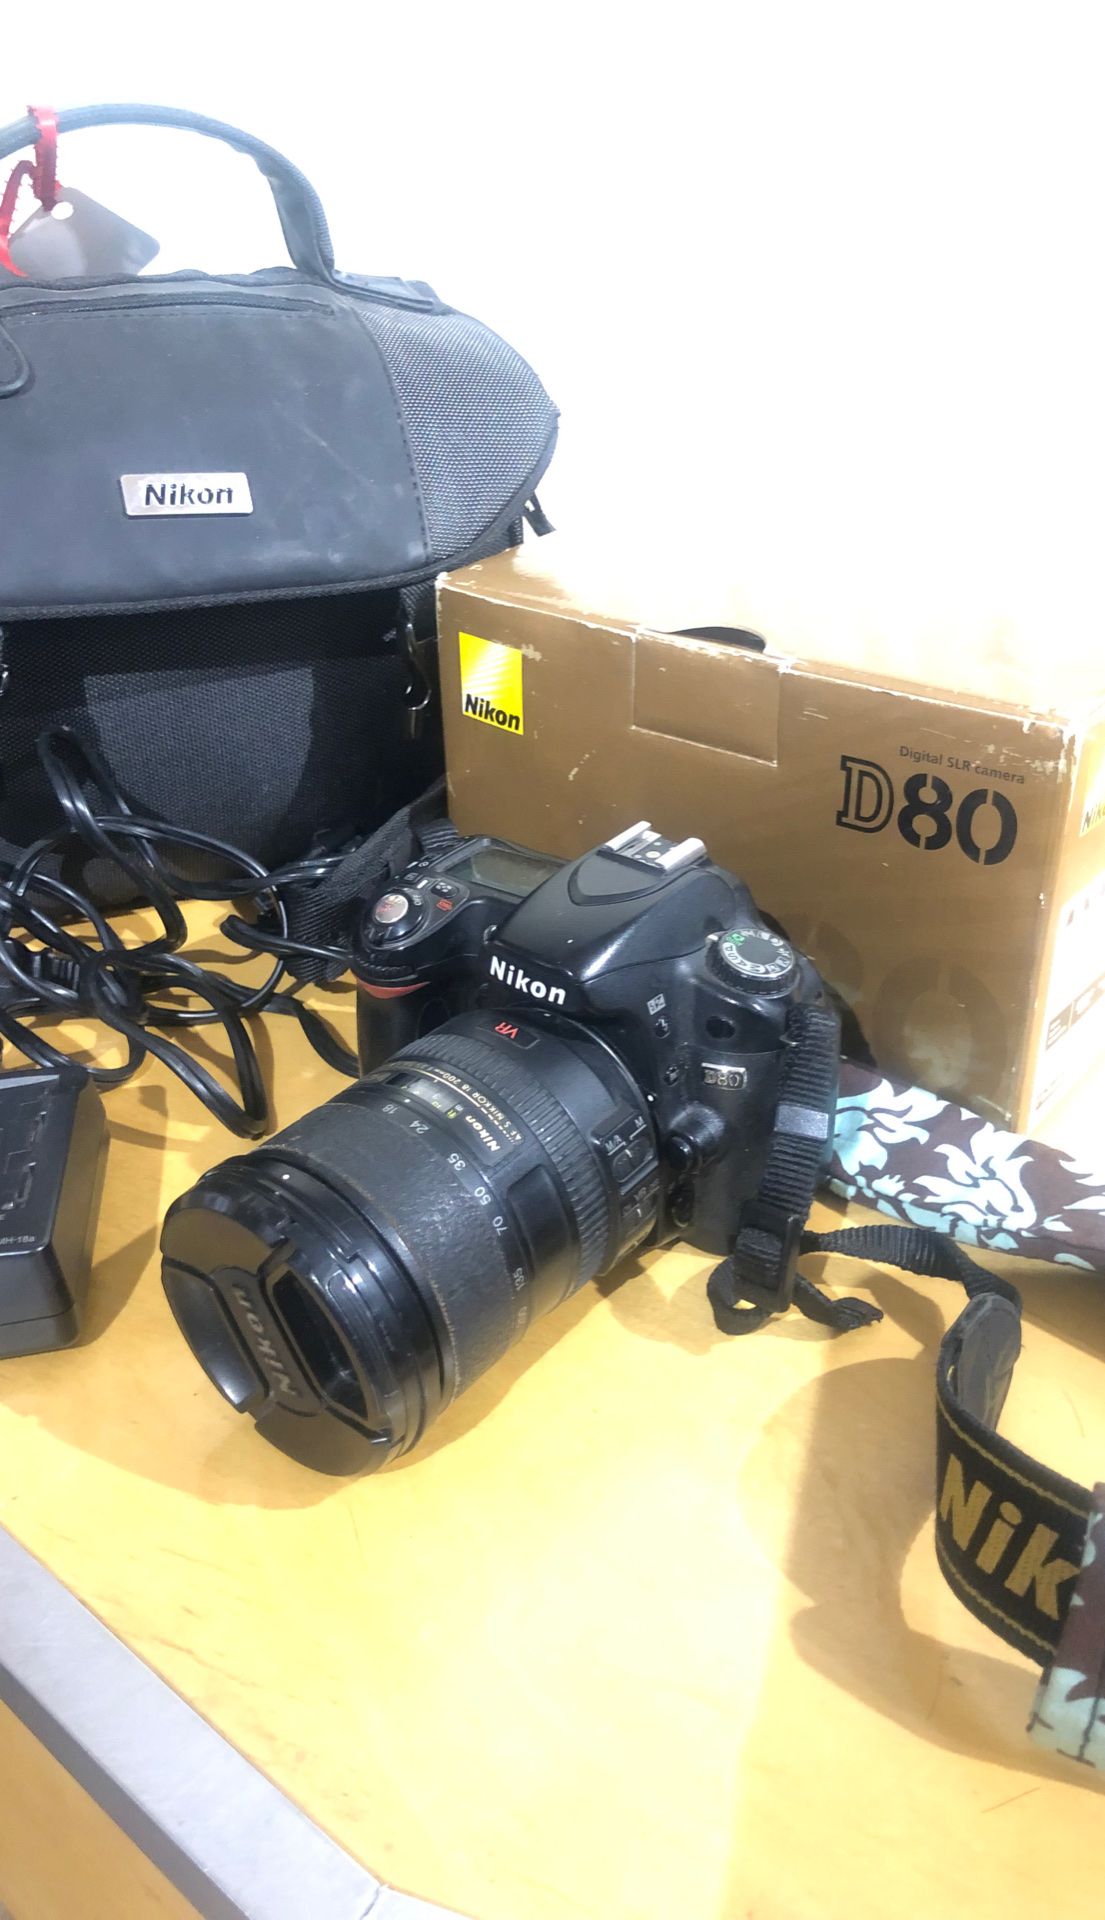 Nikon D80 DSLR Camera with Lens, charger, bag